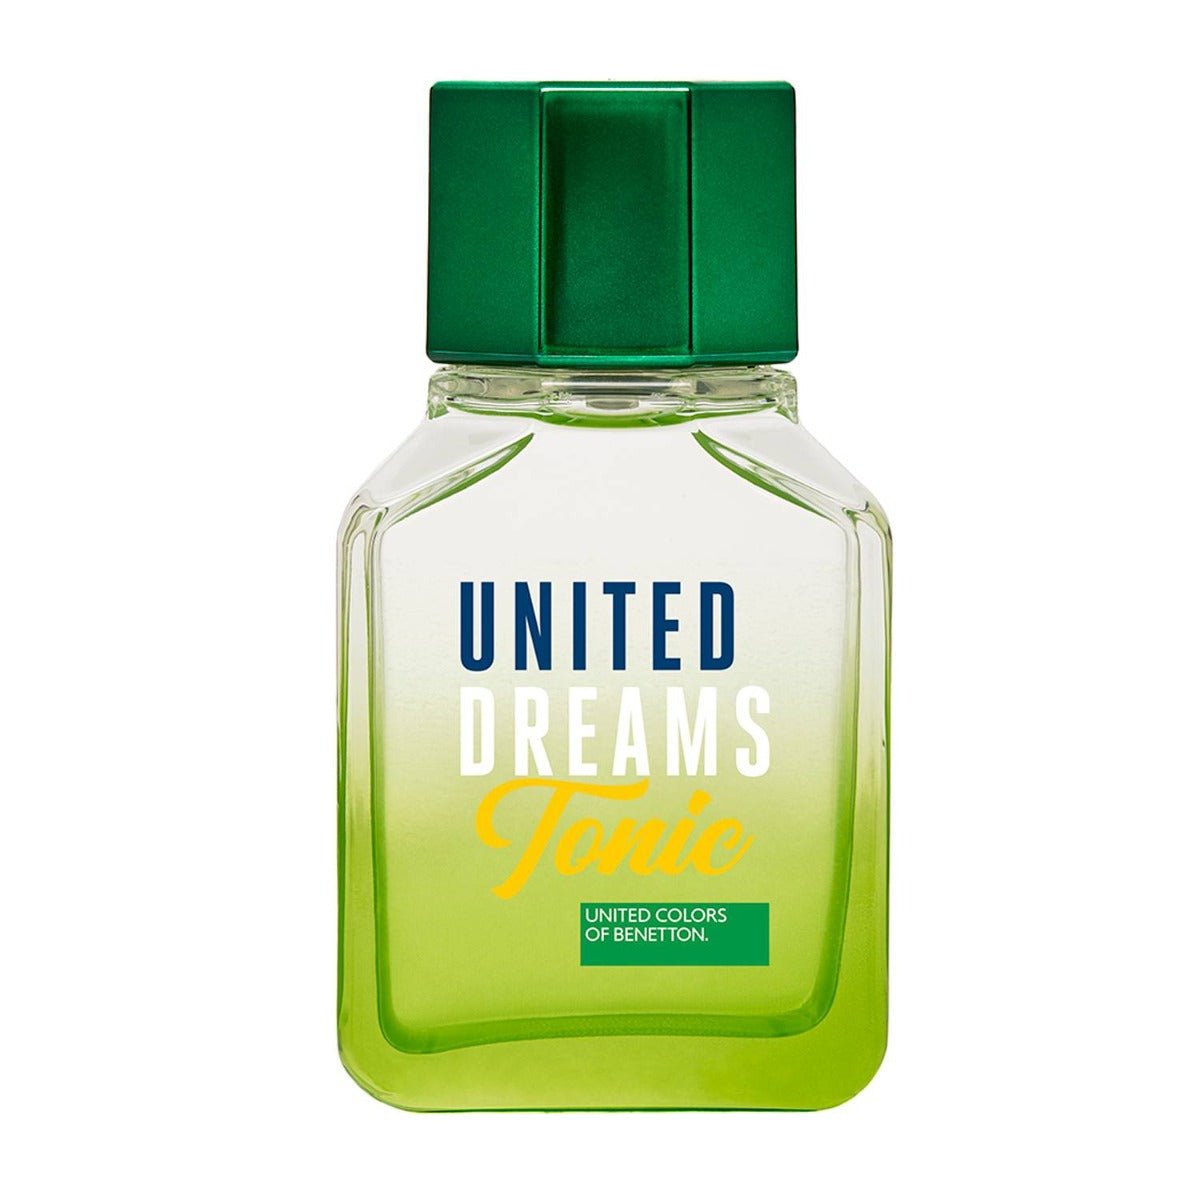 Benetton United Dreams Tonic for Him Masculino Perfume EDT For Men 100Ml-Perfume - AllurebeautypkBenetton United Dreams Tonic for Him Masculino Perfume EDT For Men 100Ml-Perfume